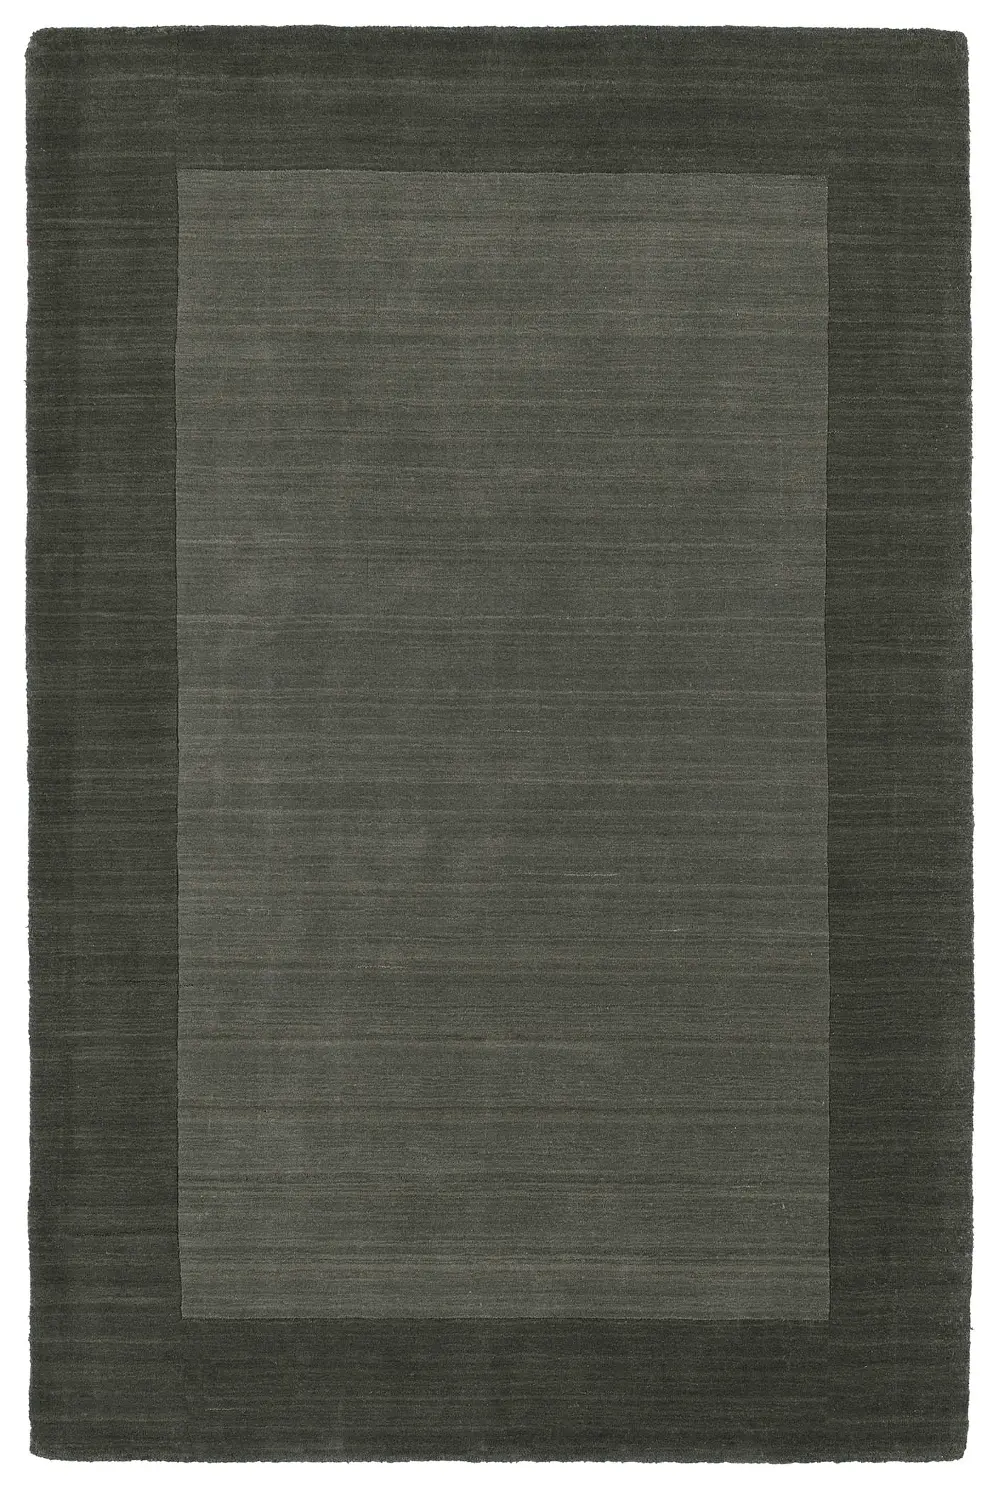 5 x 8 Medium Wool Charcoal Gray Area Rug - Regency-1